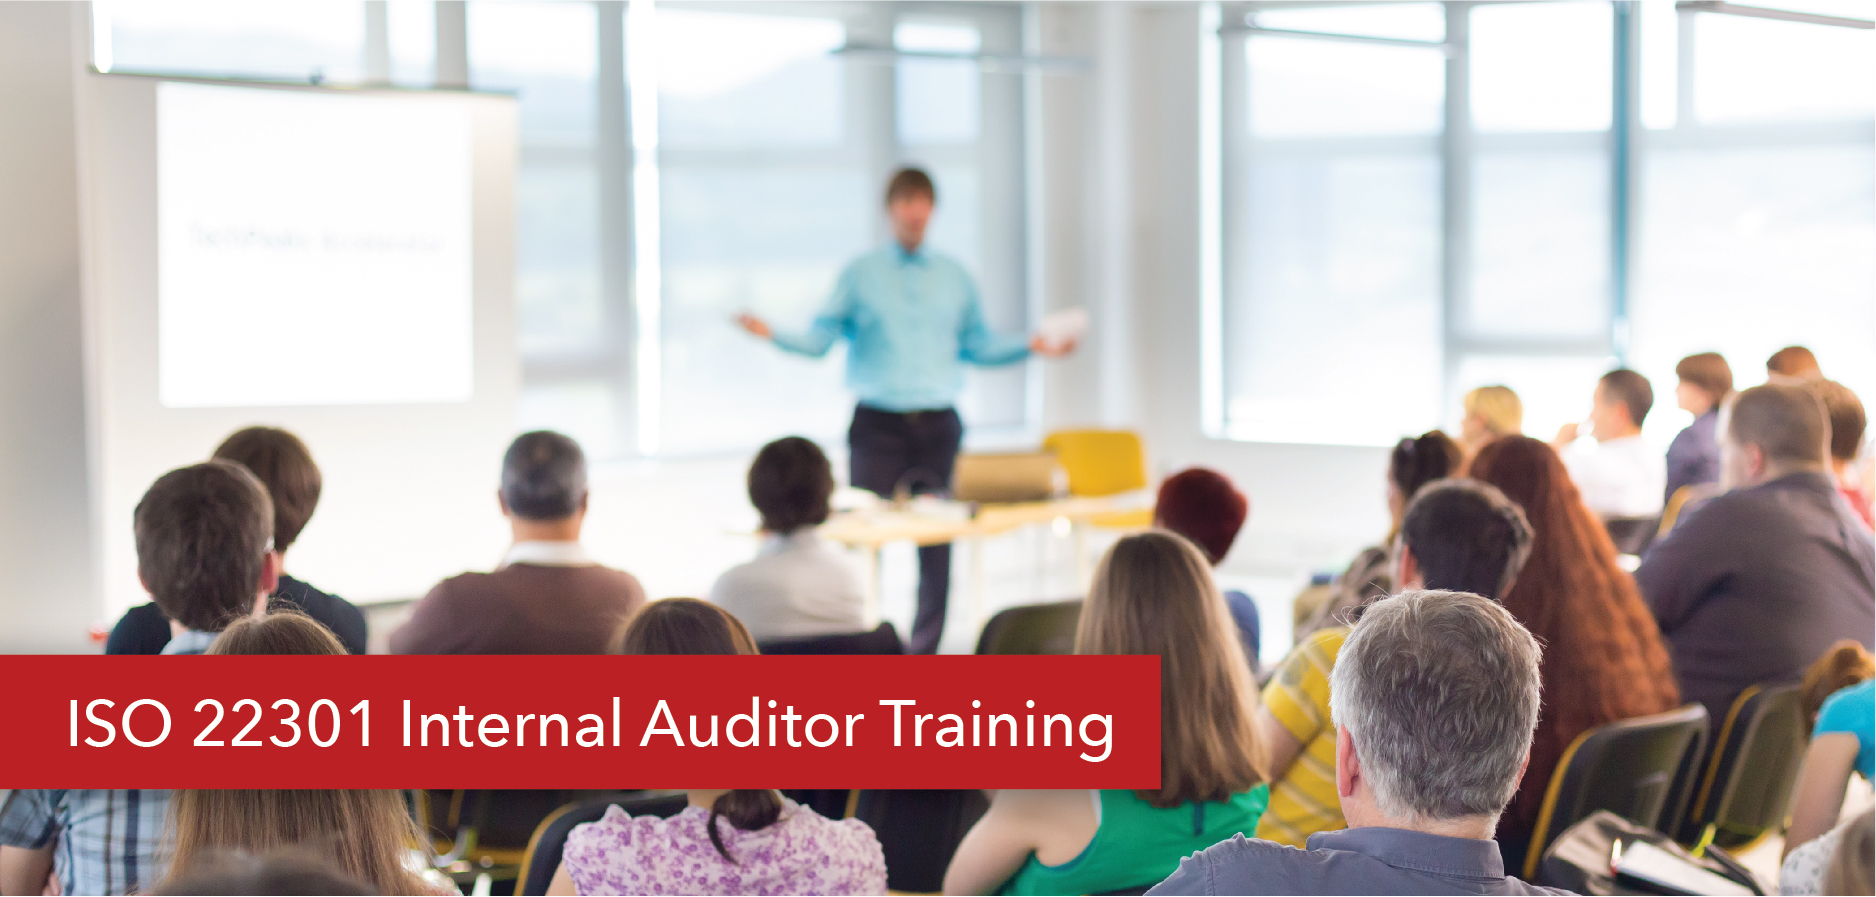 ISO 22301 Internal Auditor Training